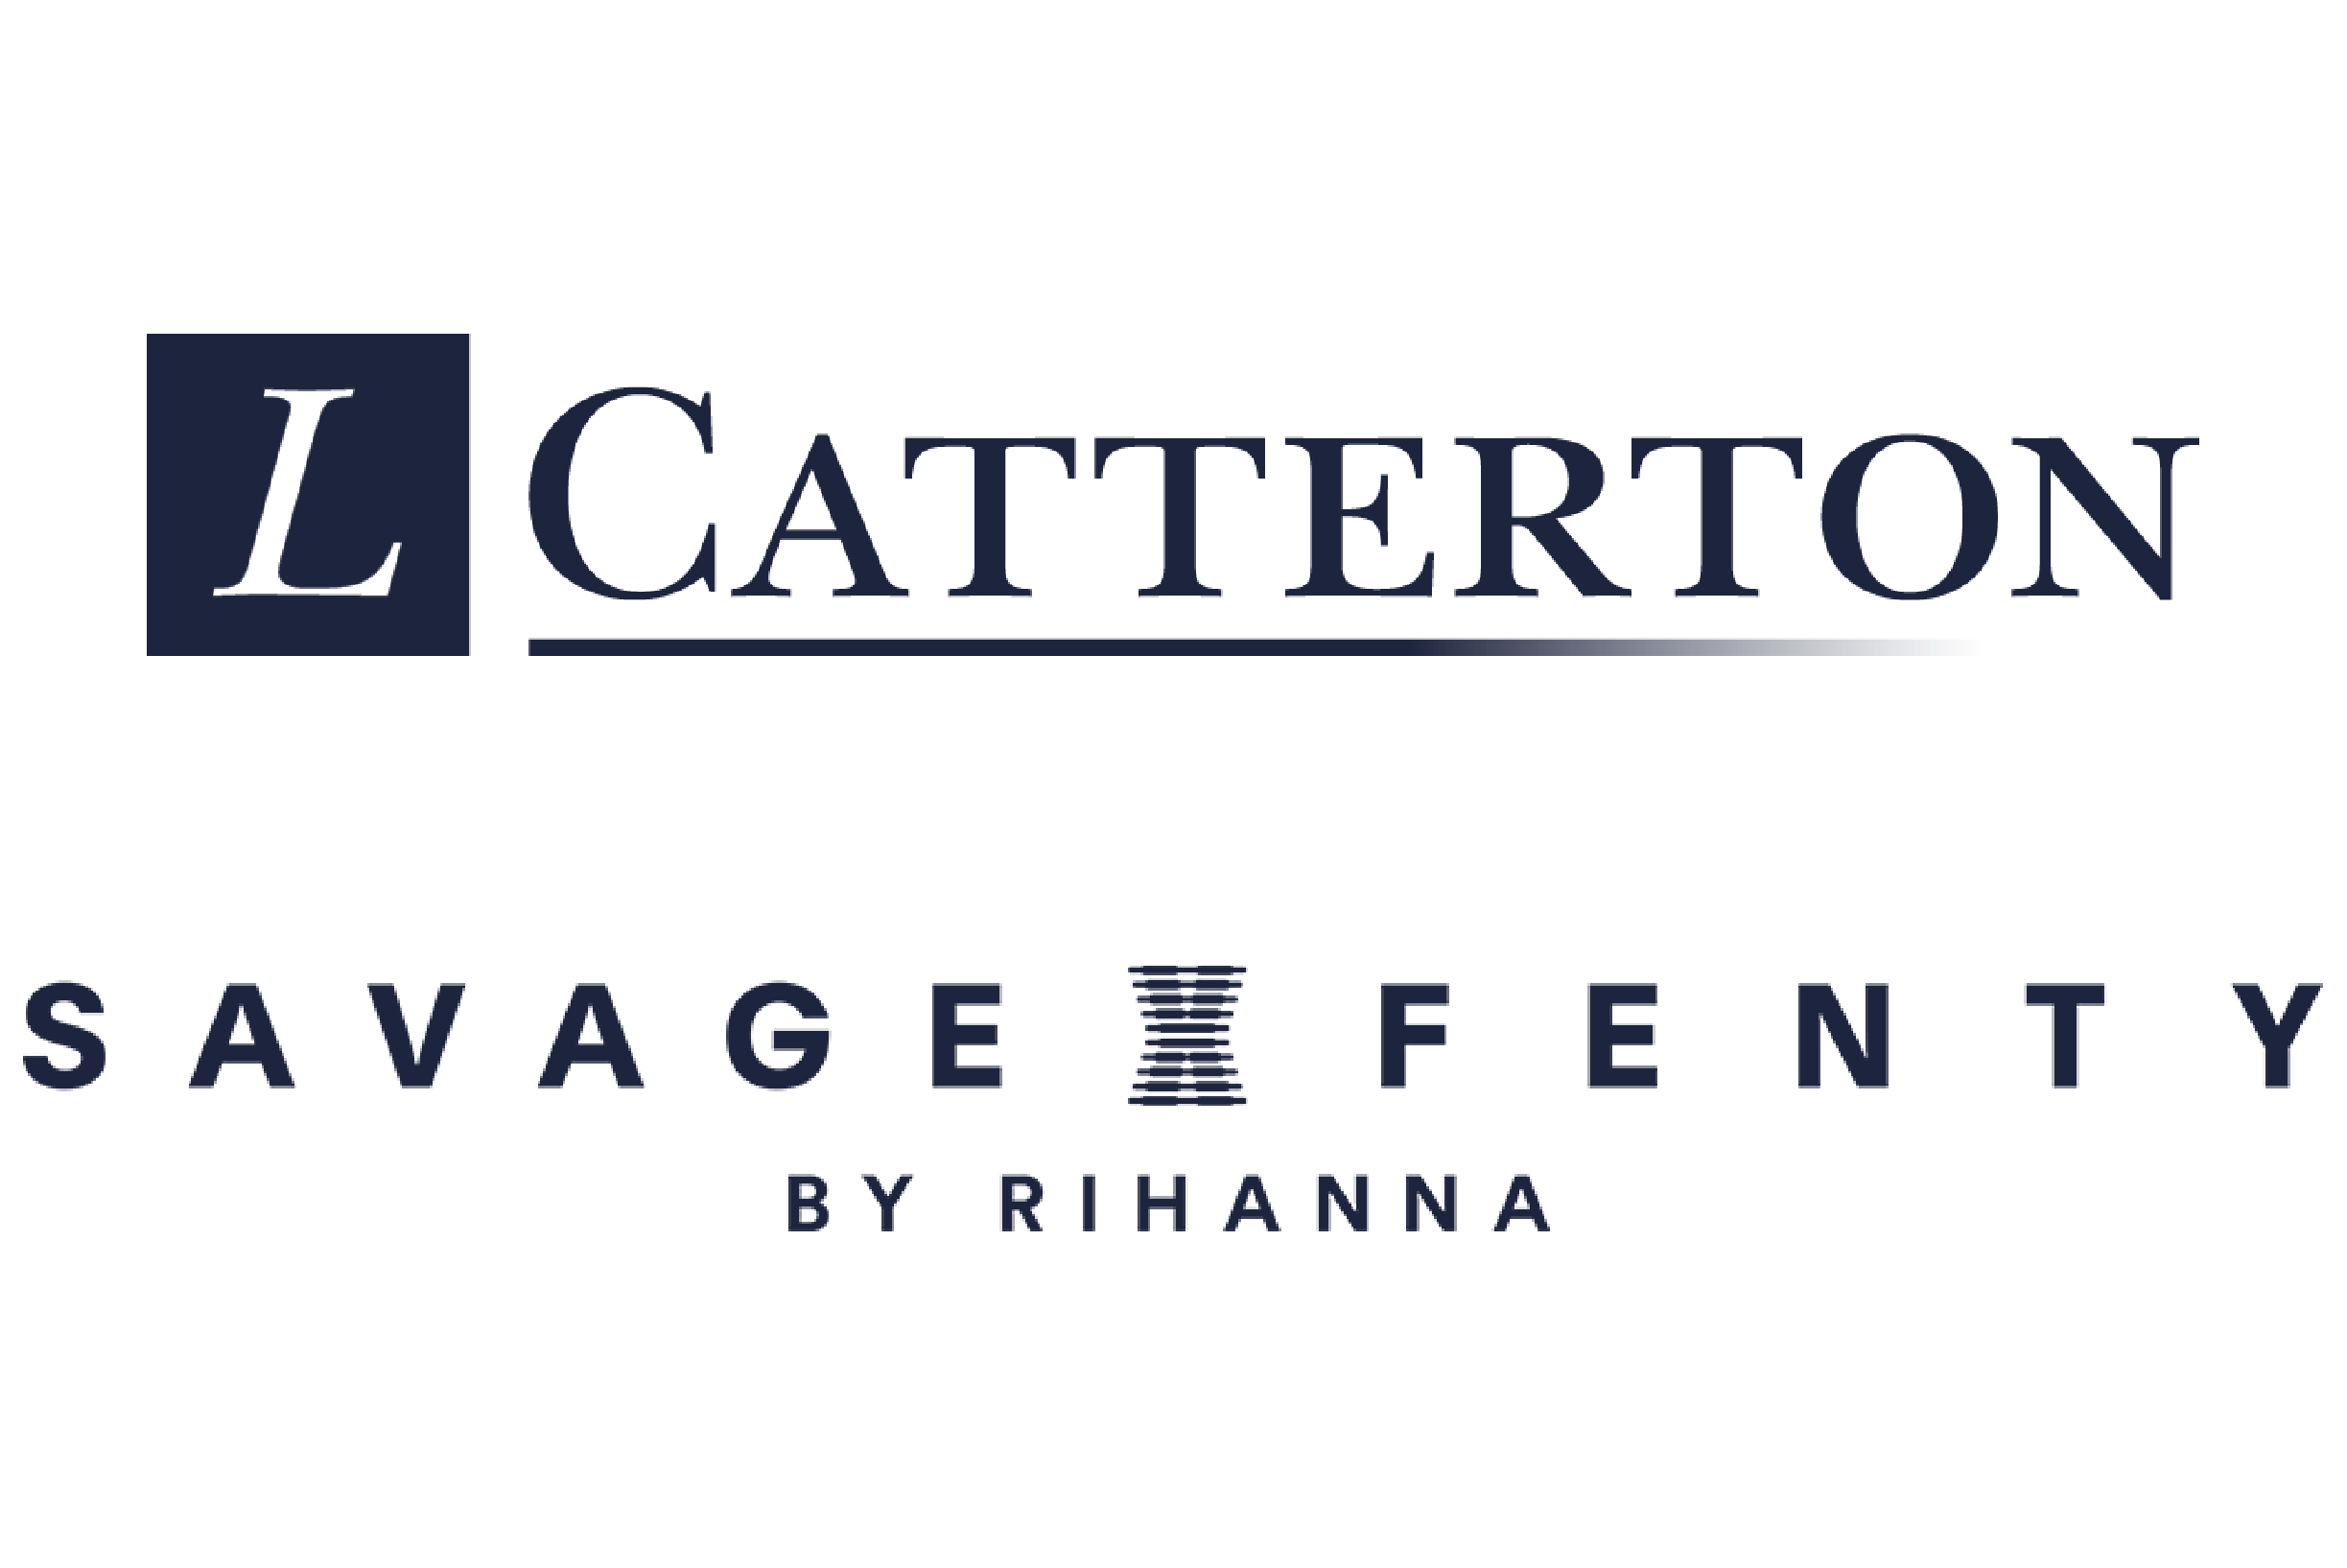 l catterton logo transparent